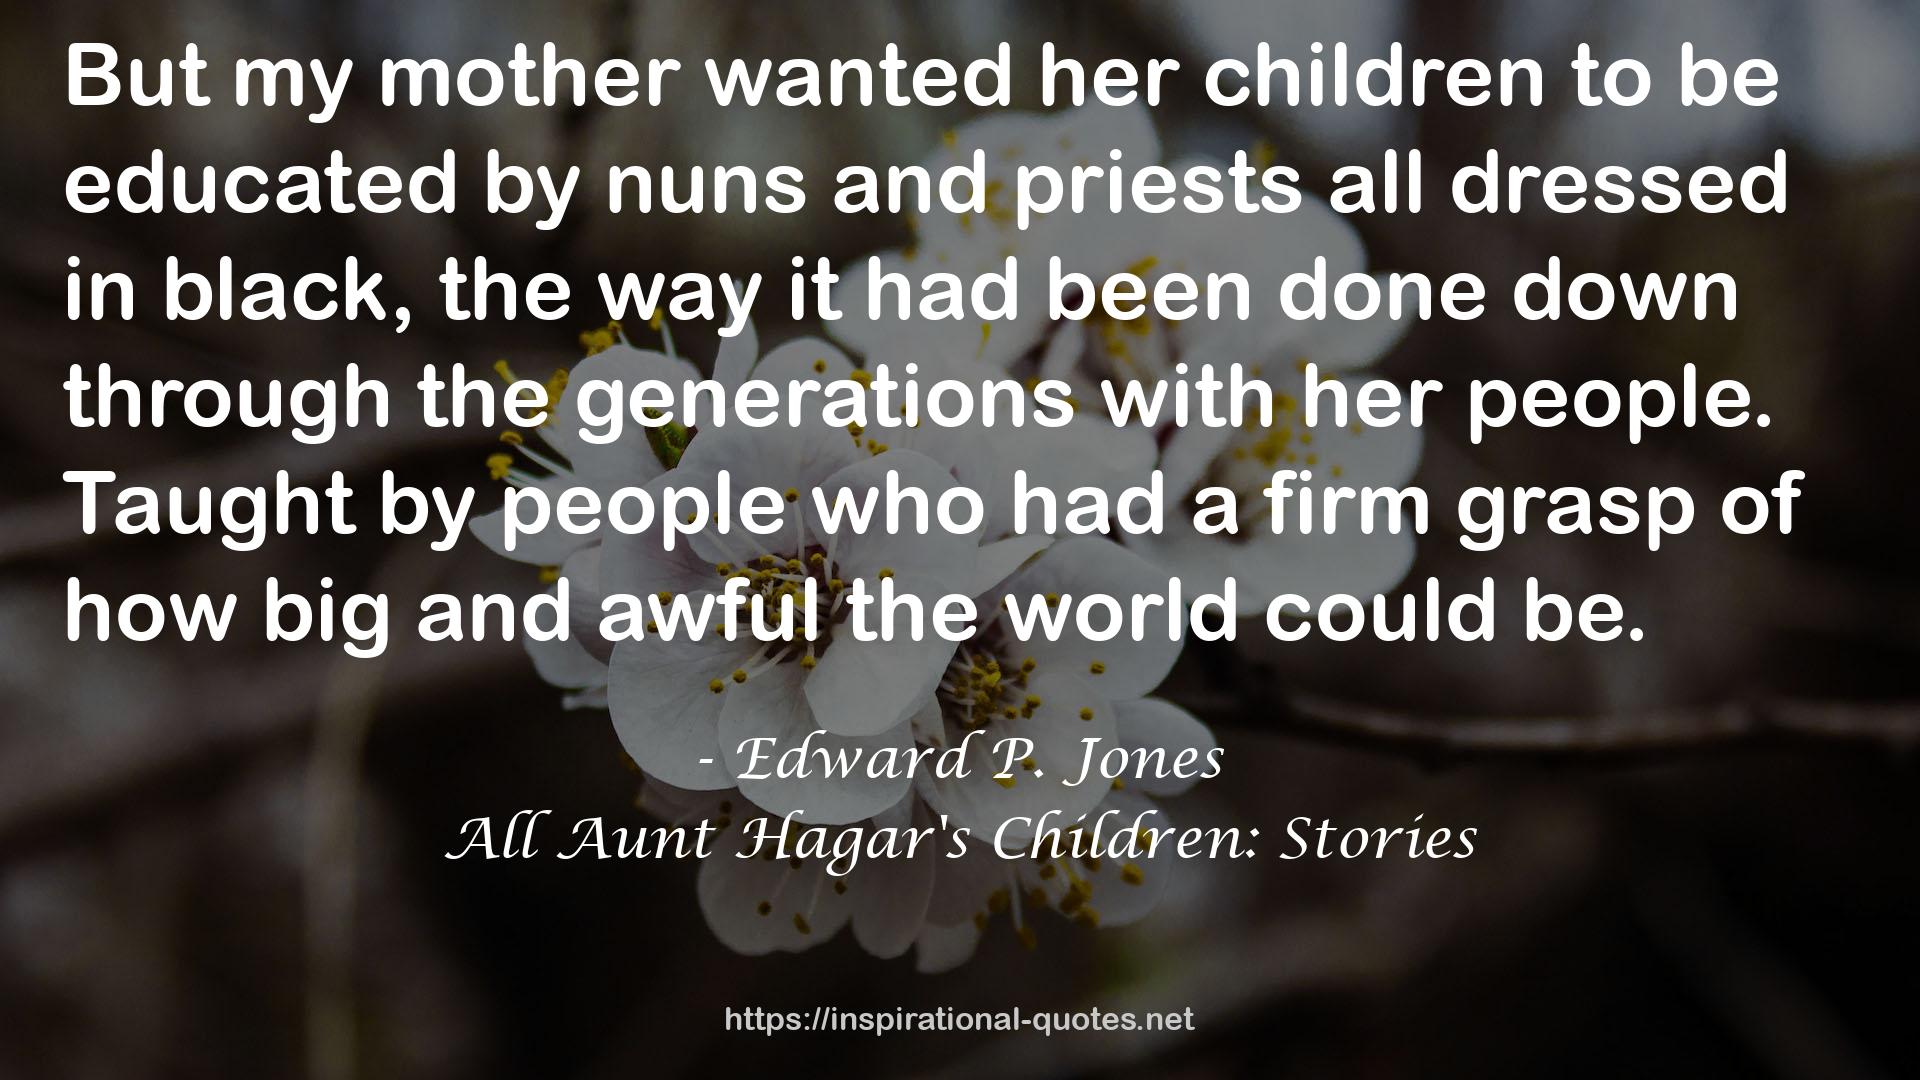 All Aunt Hagar's Children: Stories QUOTES